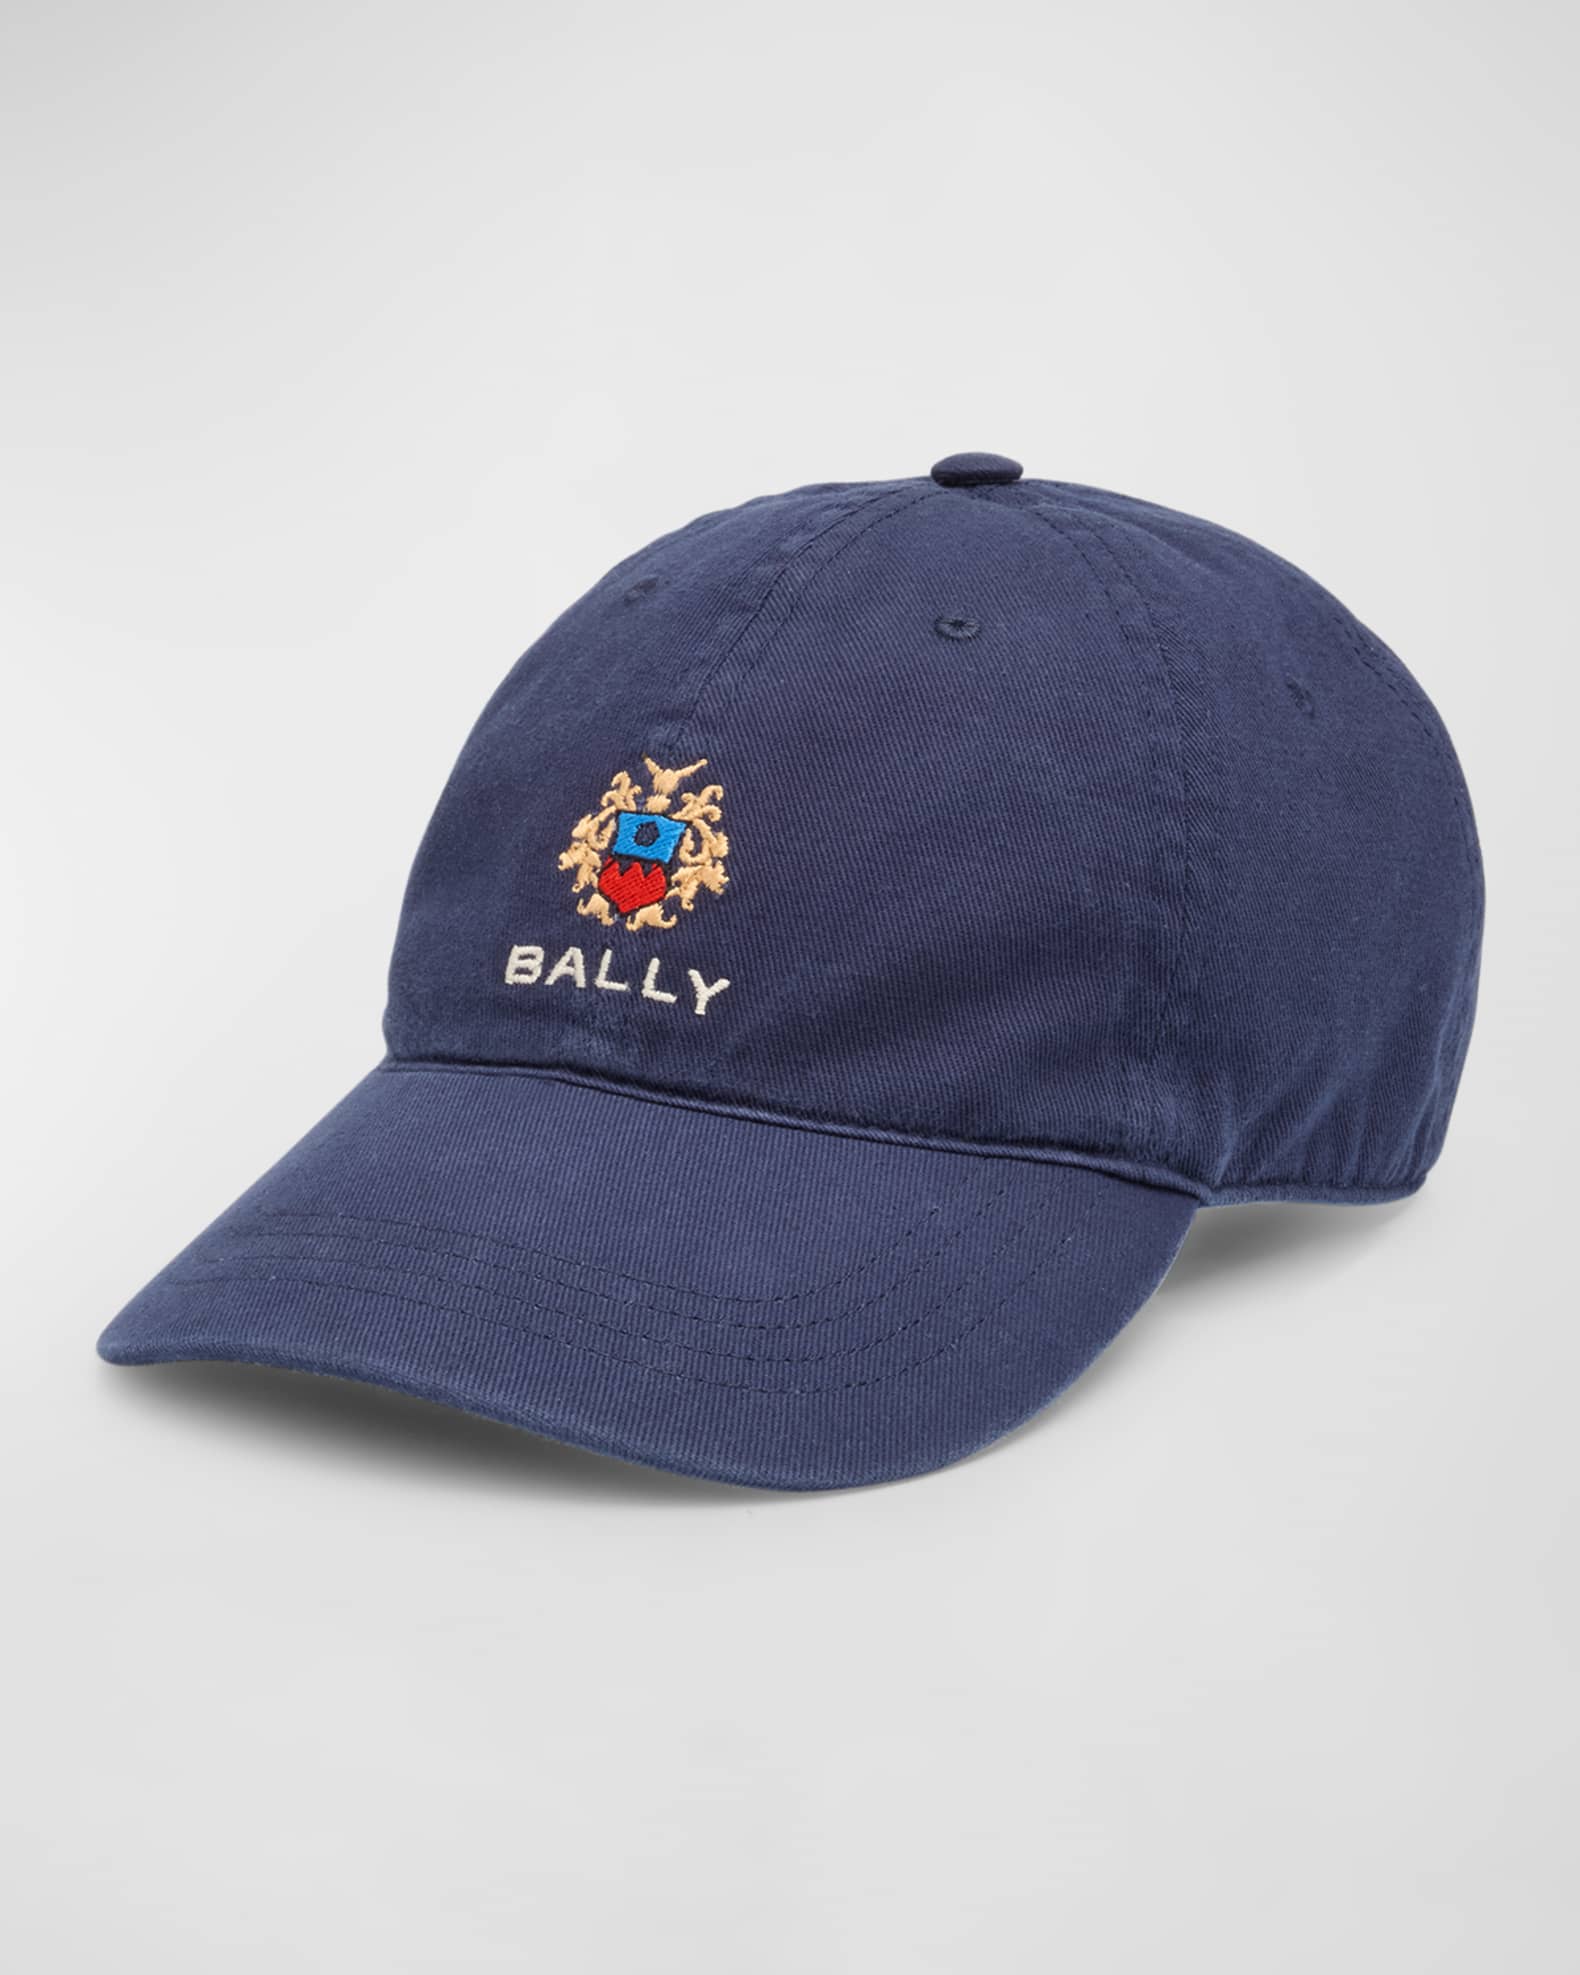 Bally hat